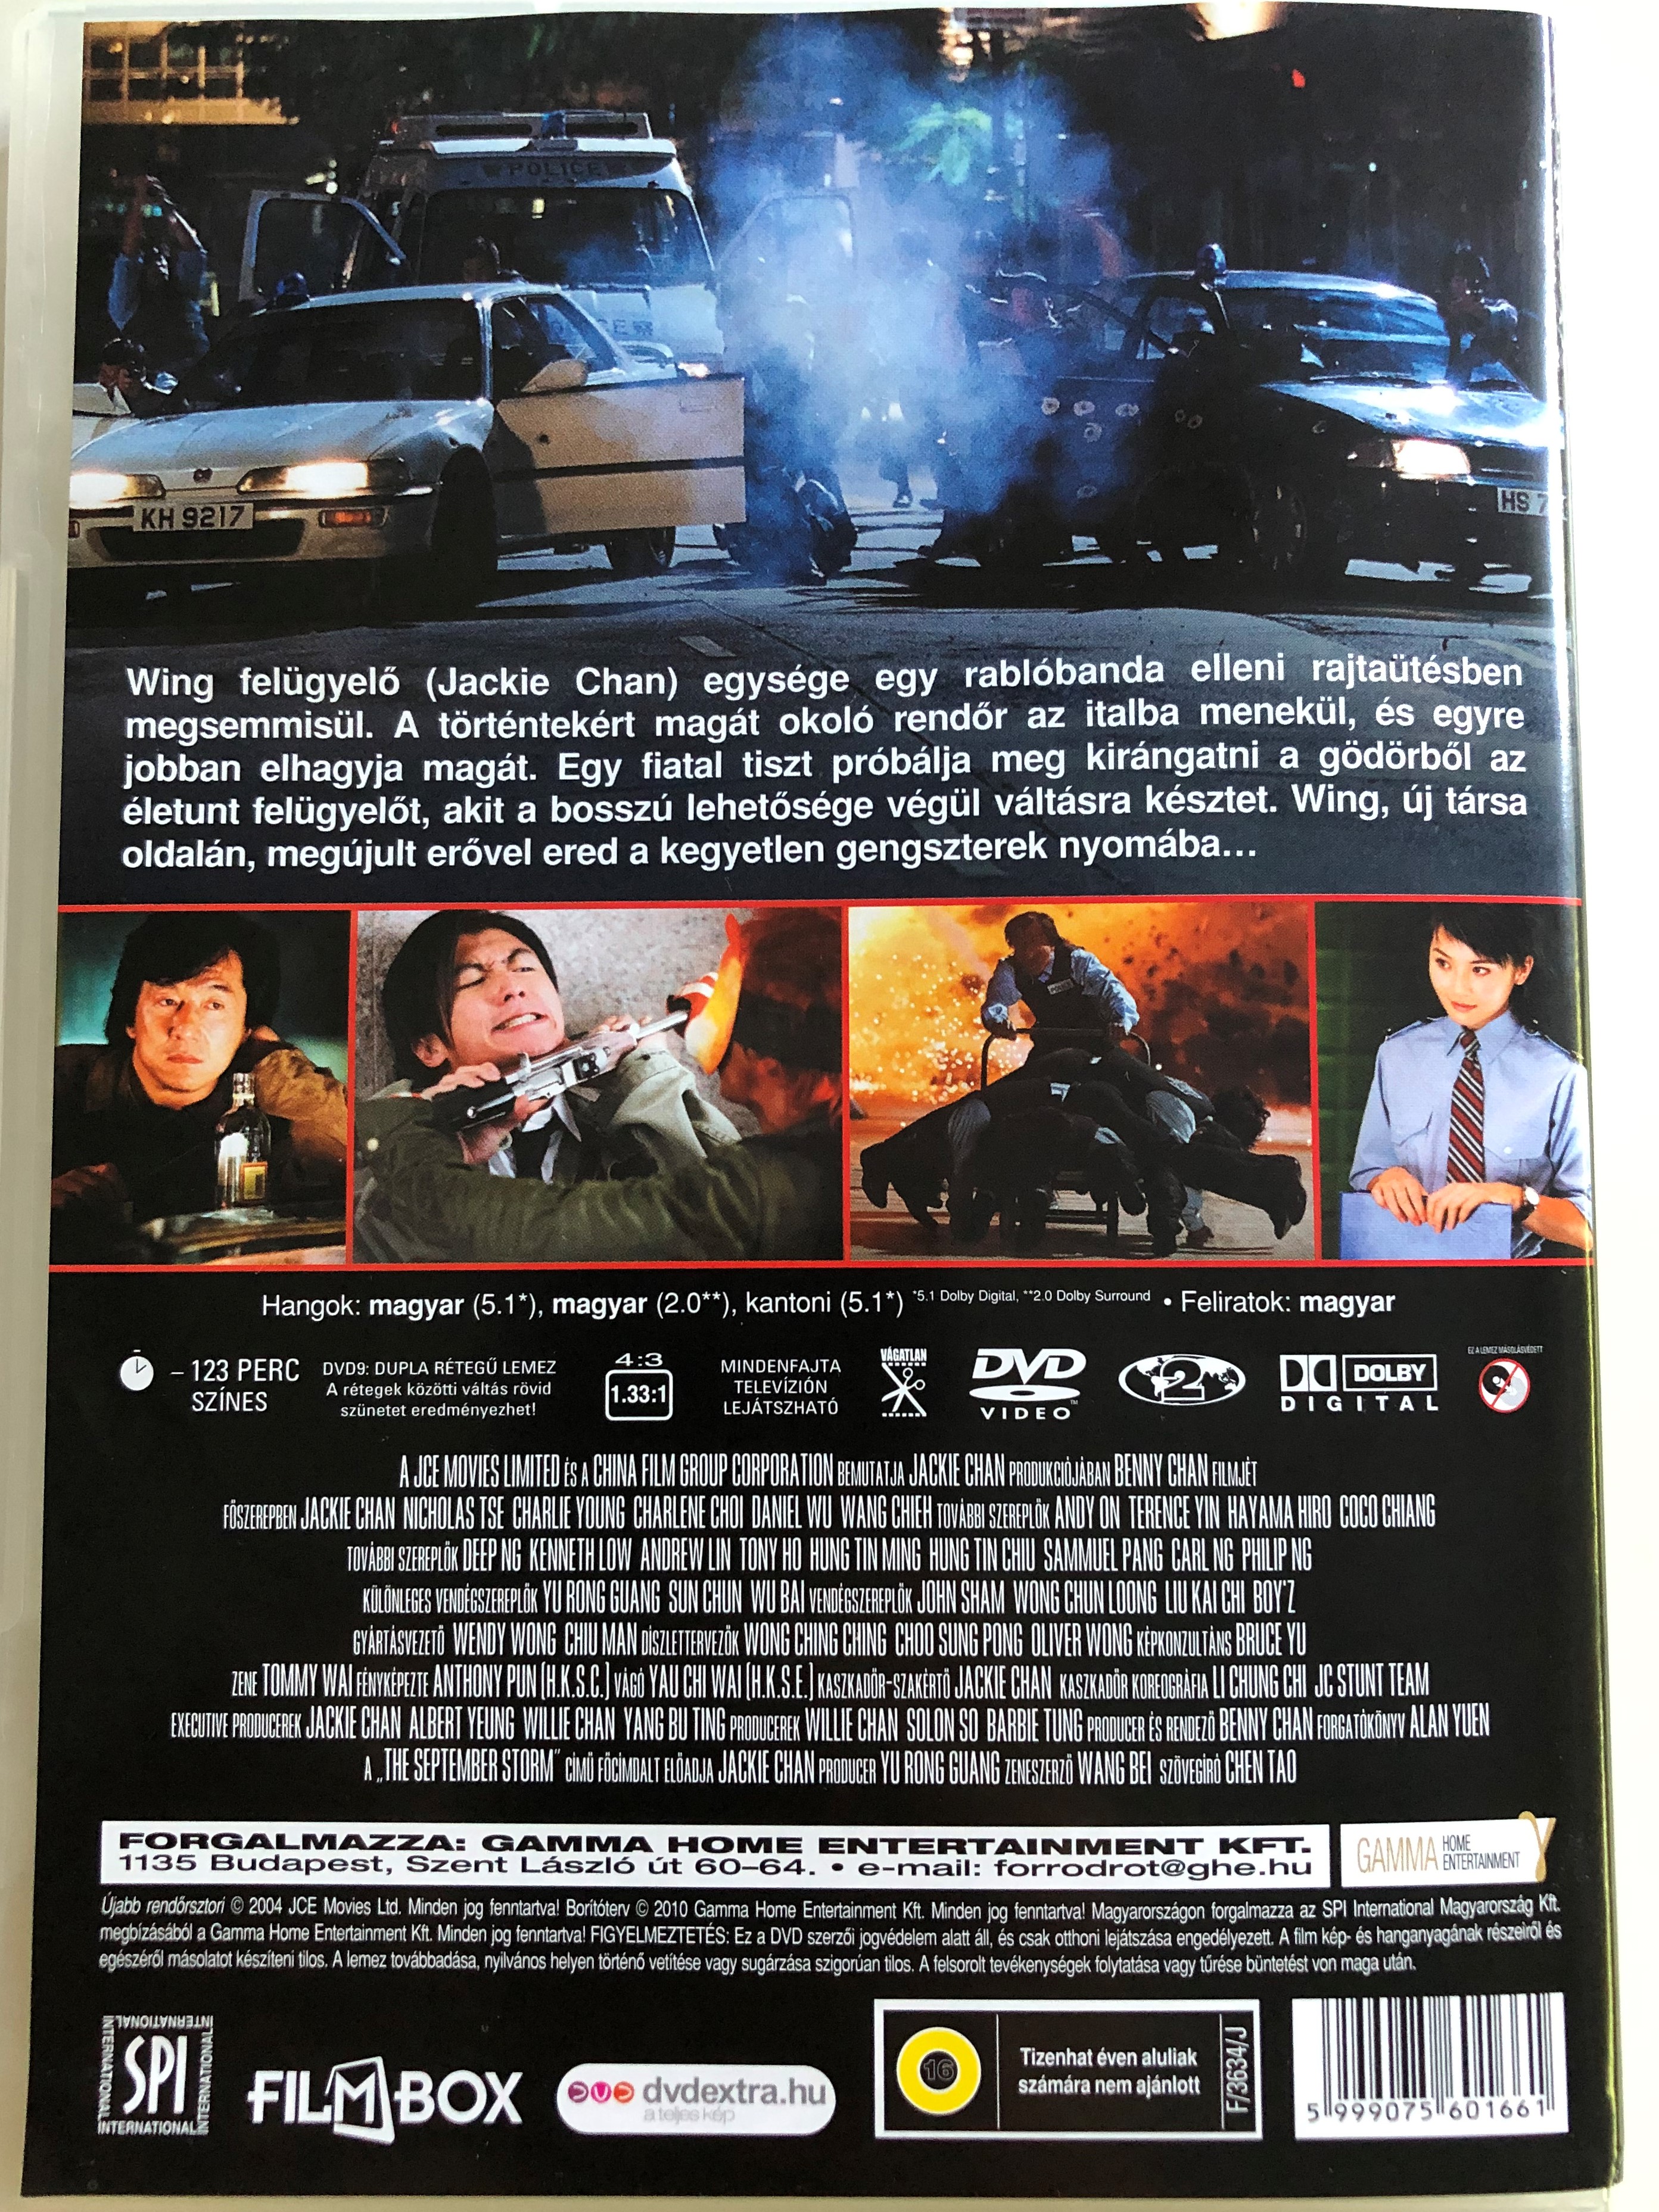 new-police-story-dvd-2004-jabb-rend-rsztori-directed-by-benny-chan-starring-jackie-chan-nicholas-tse-charlie-yeung-charlene-choi-daniel-wu-ken-lo-liu-kai-chi-2-.jpg